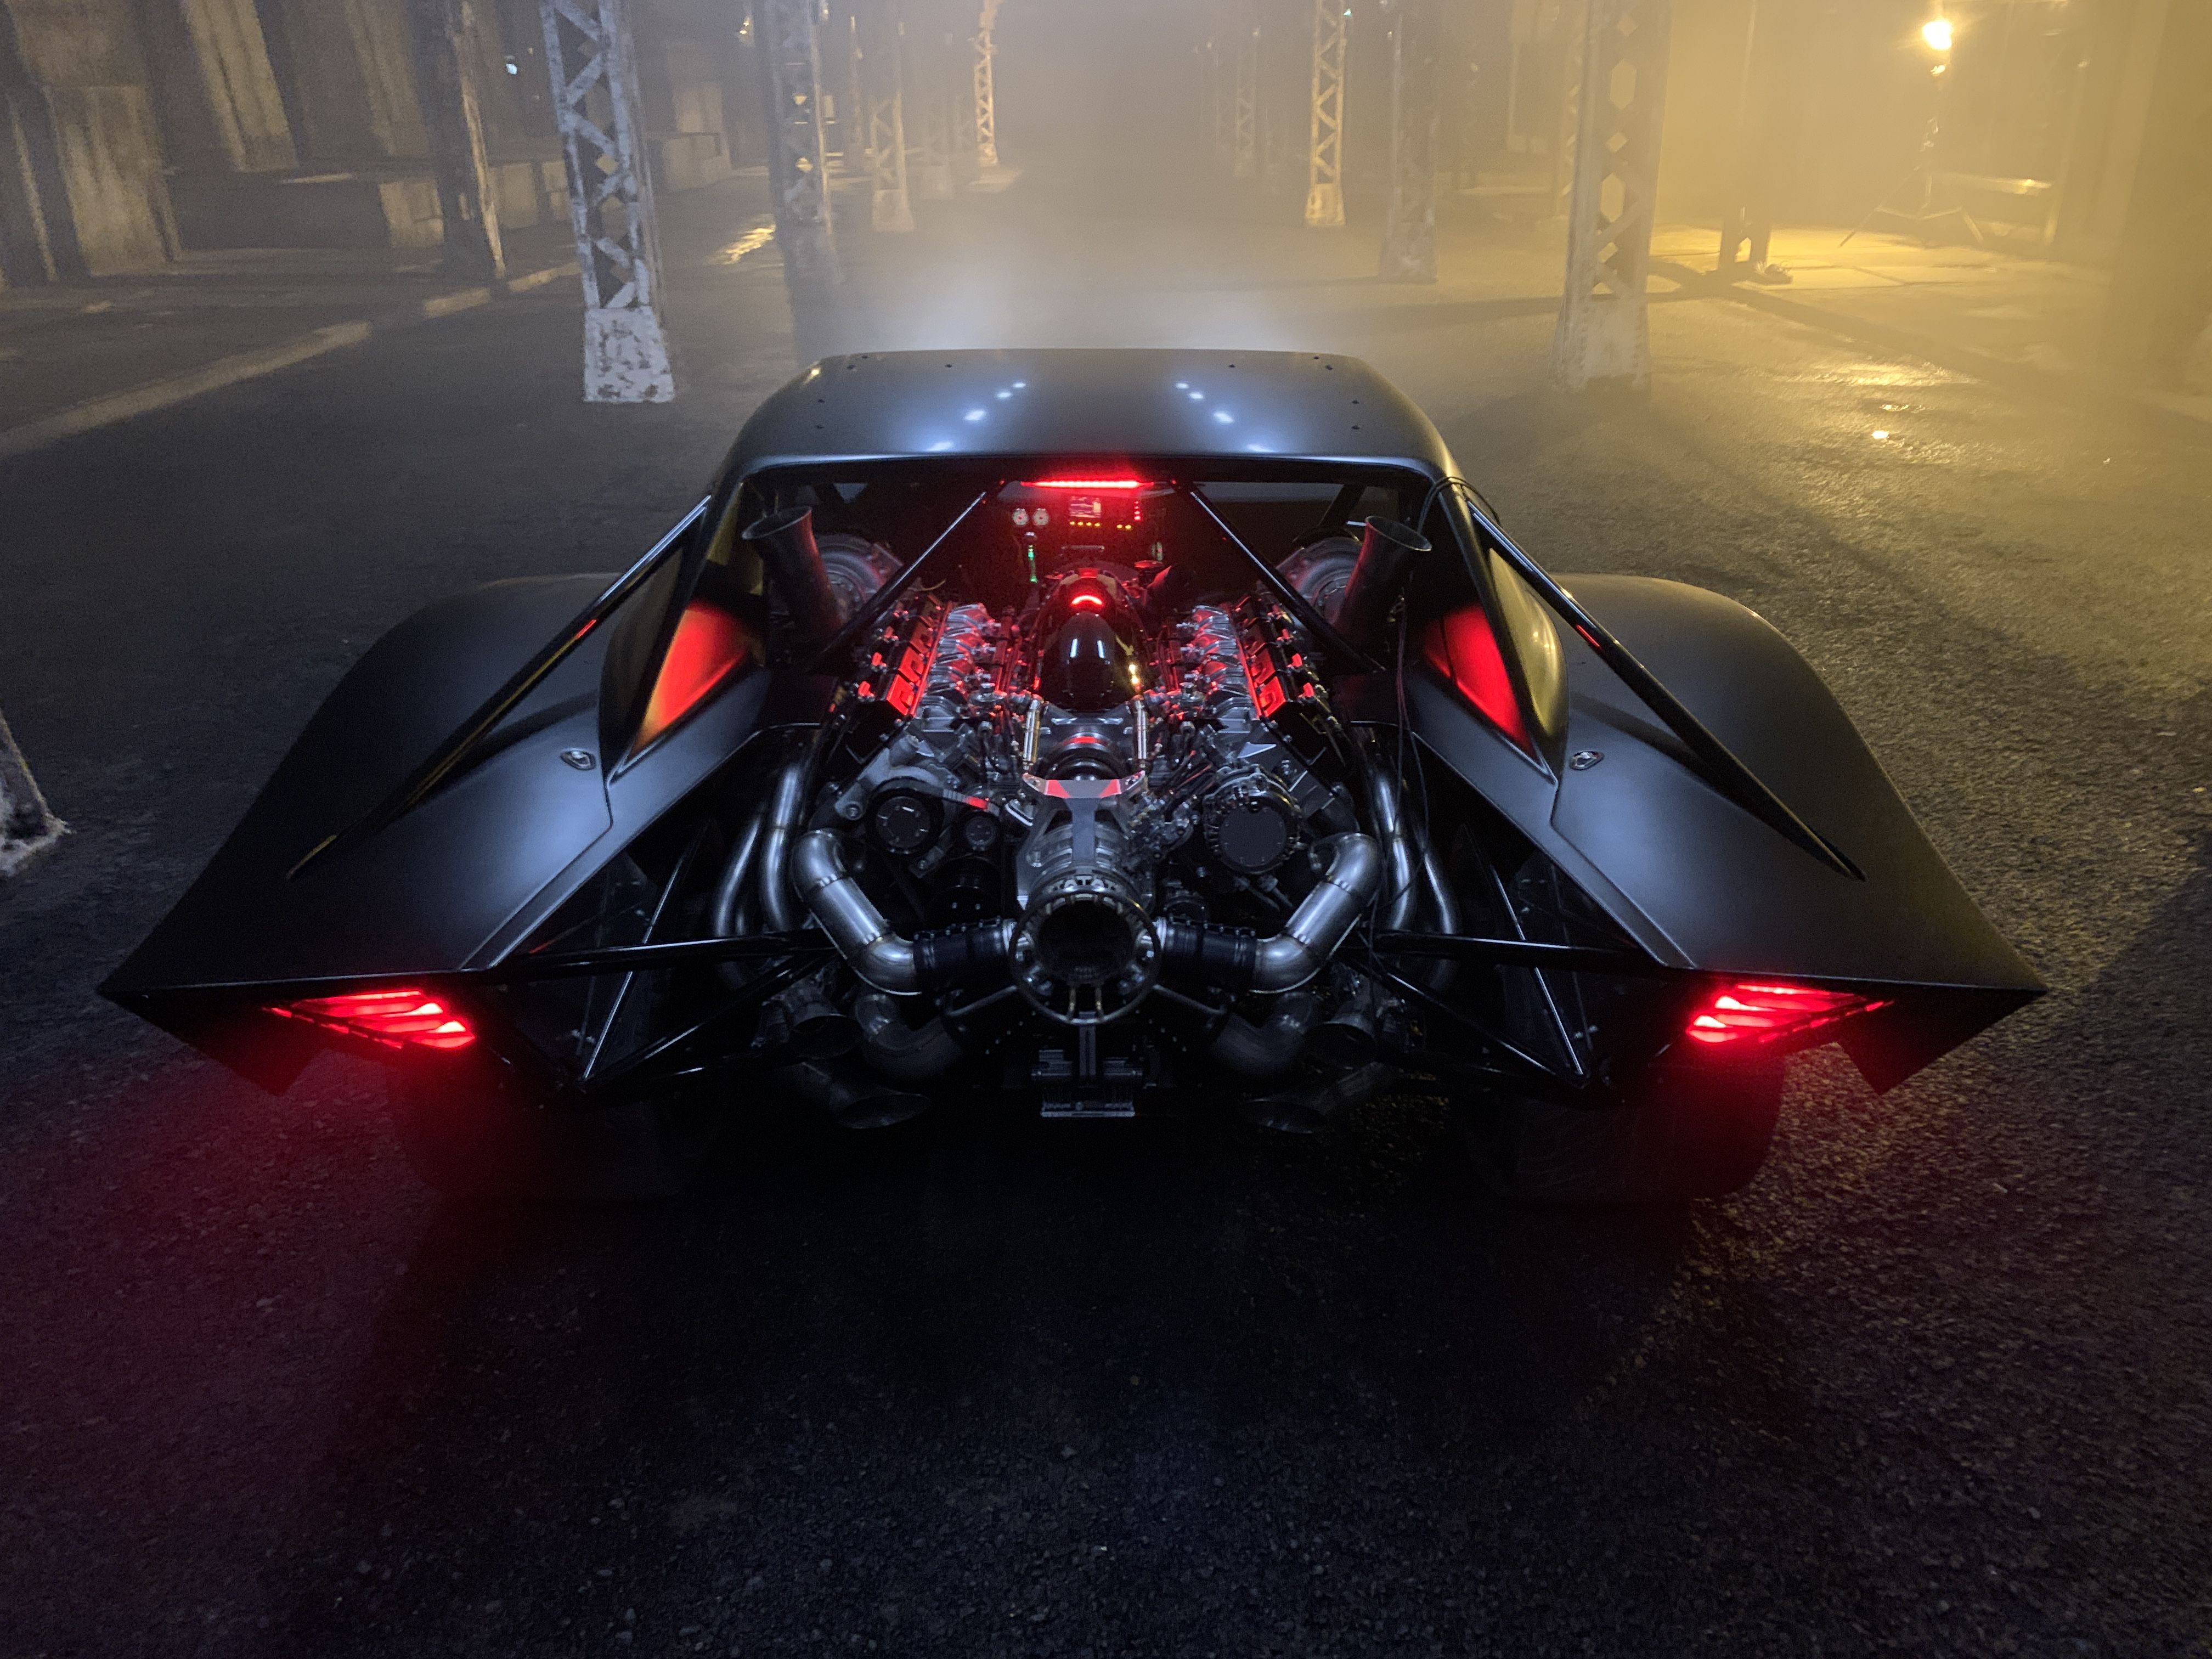 new batmobile concept